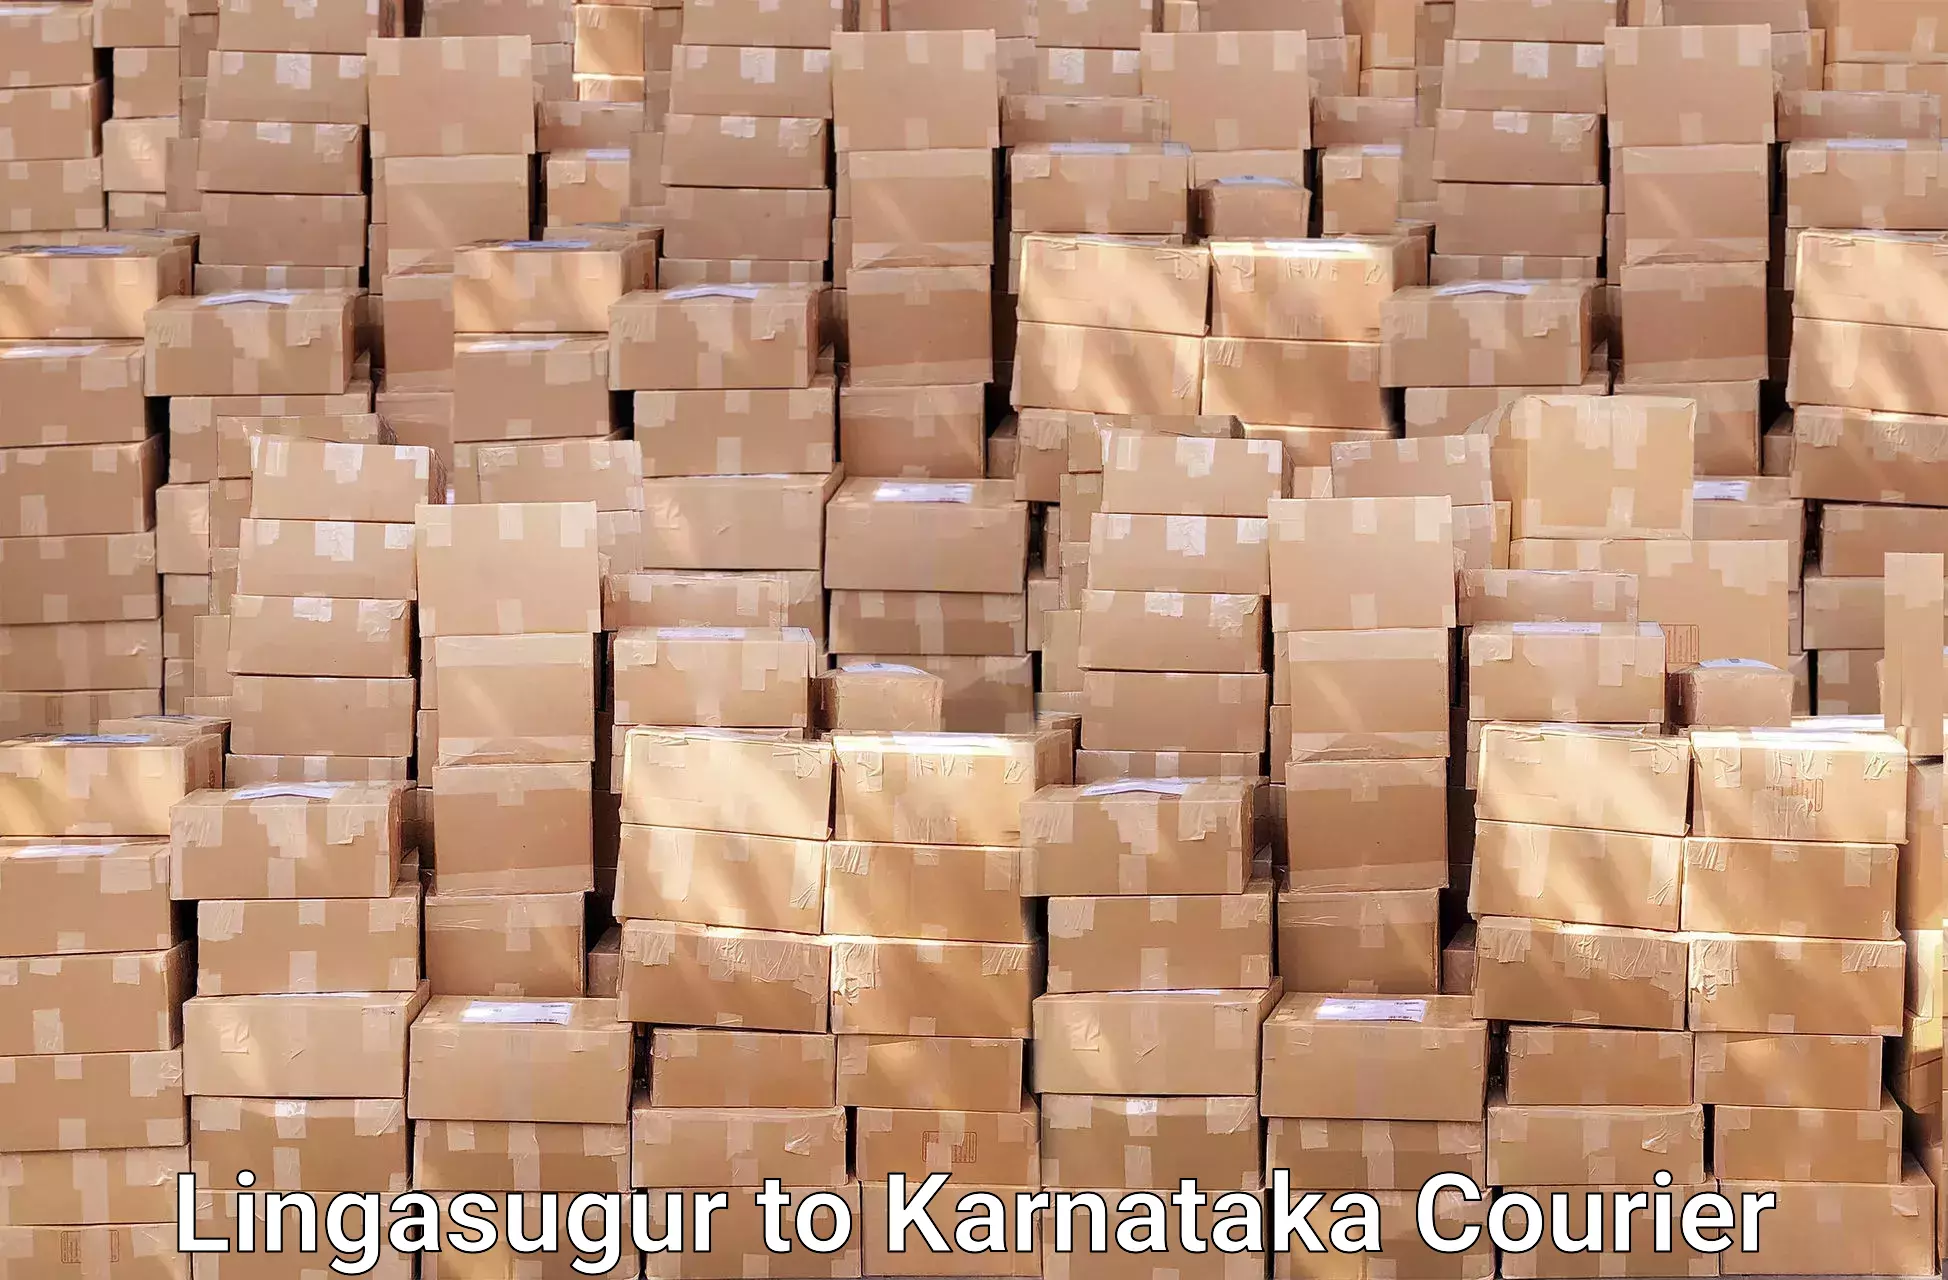 Trusted relocation experts Lingasugur to Karnataka